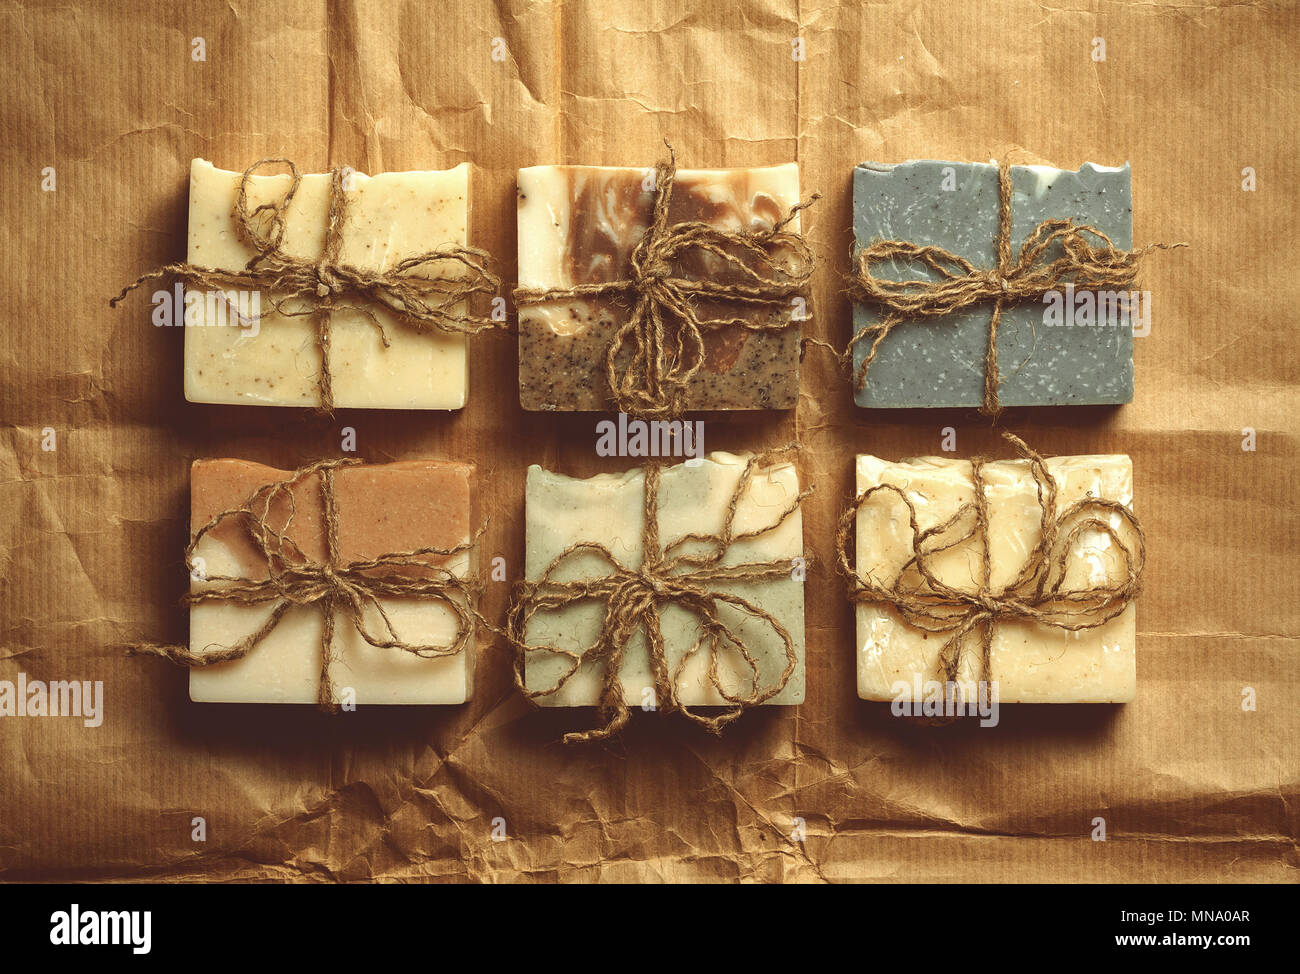 Organic handmade soap on crumpled packing paper. Stock Photo